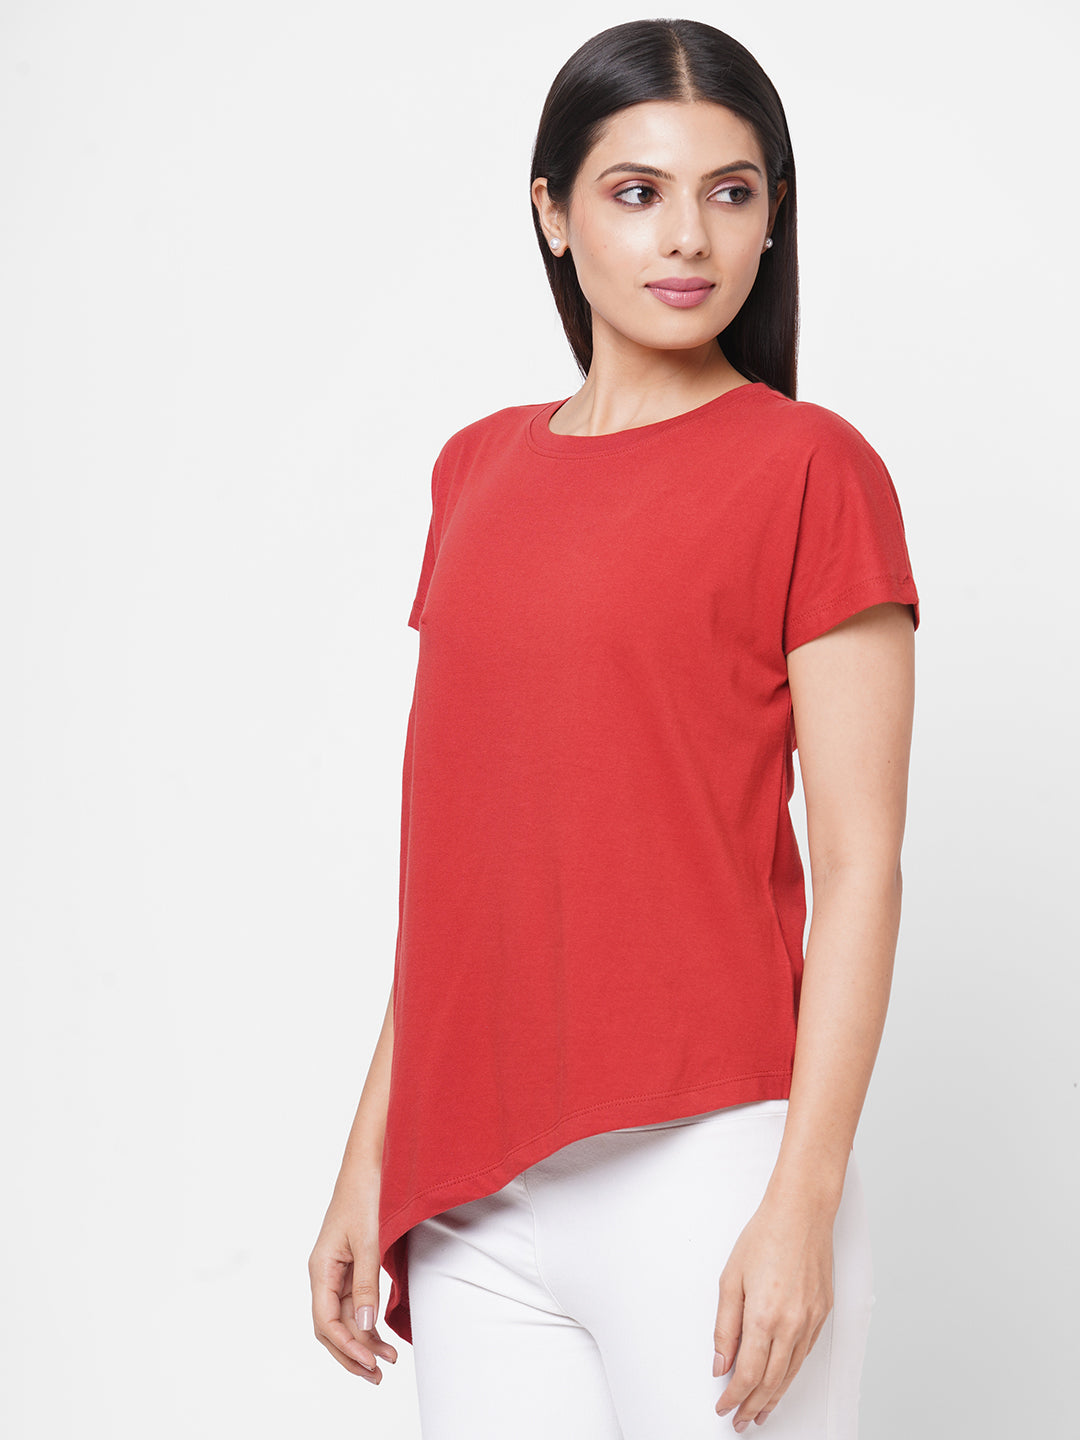 Womens Red Cotton A Line Tshirt